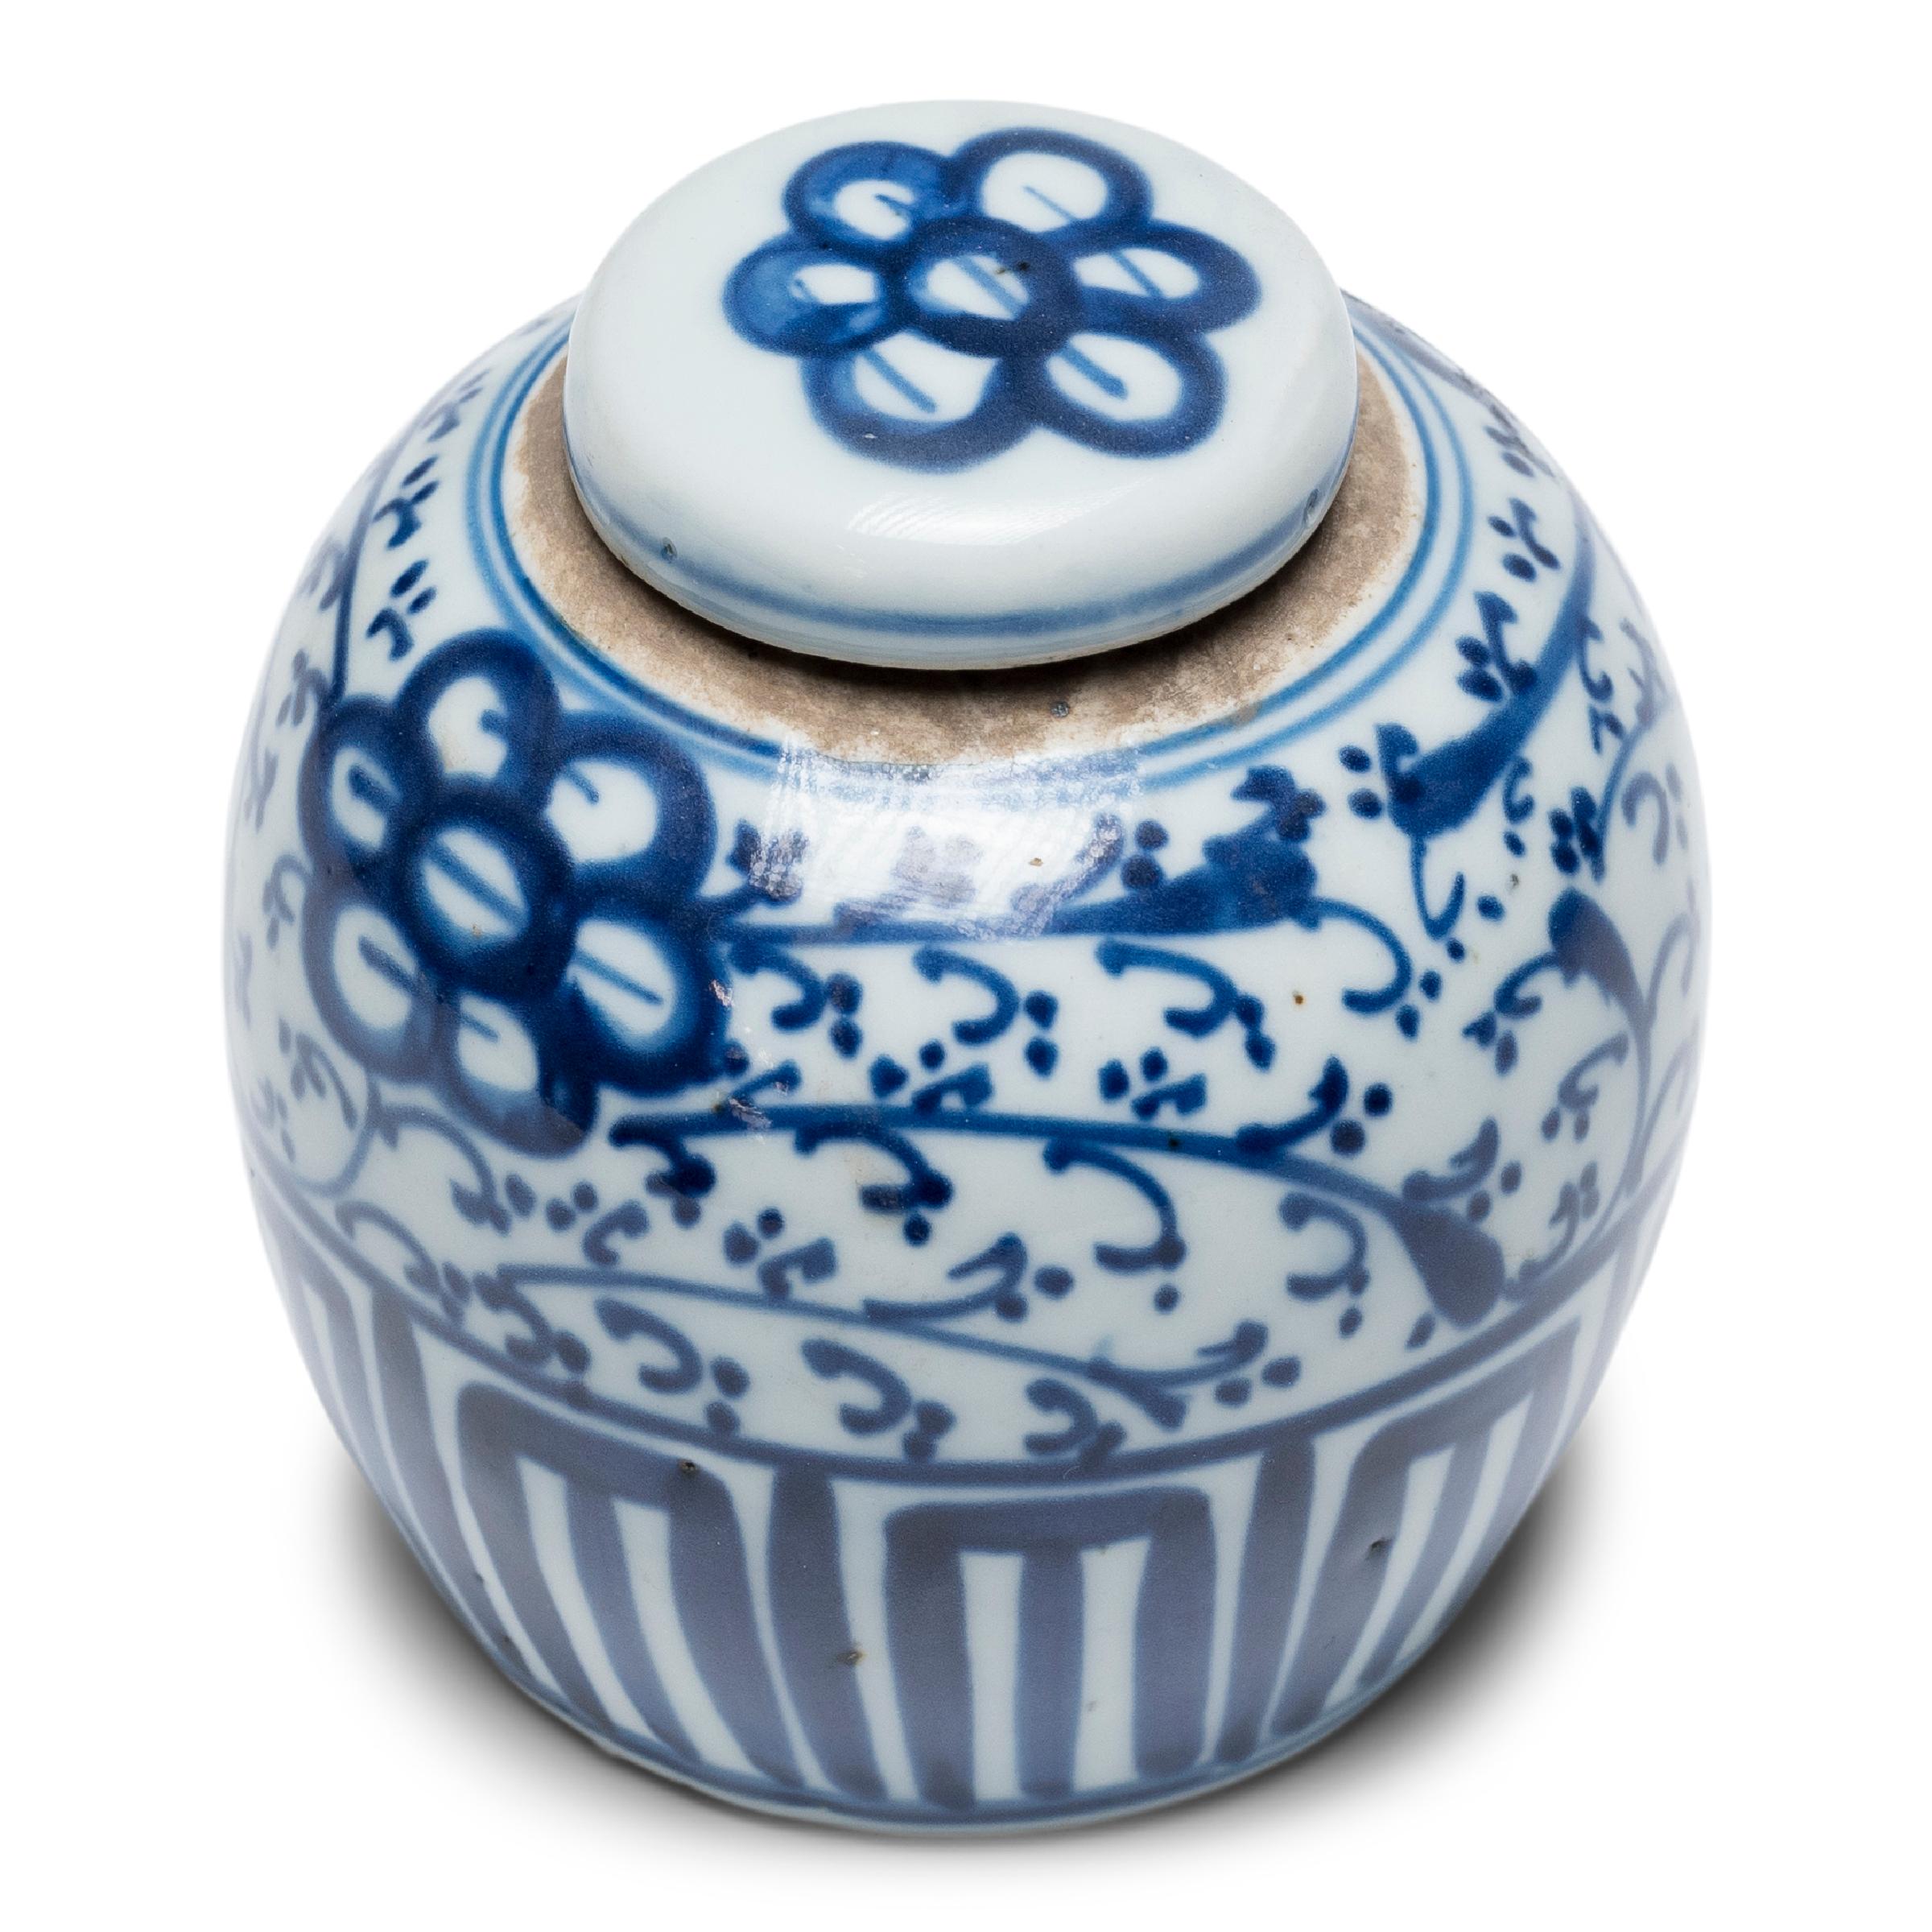 20th Century Chinese Petite Blue & White Floral Jar, c. 1900